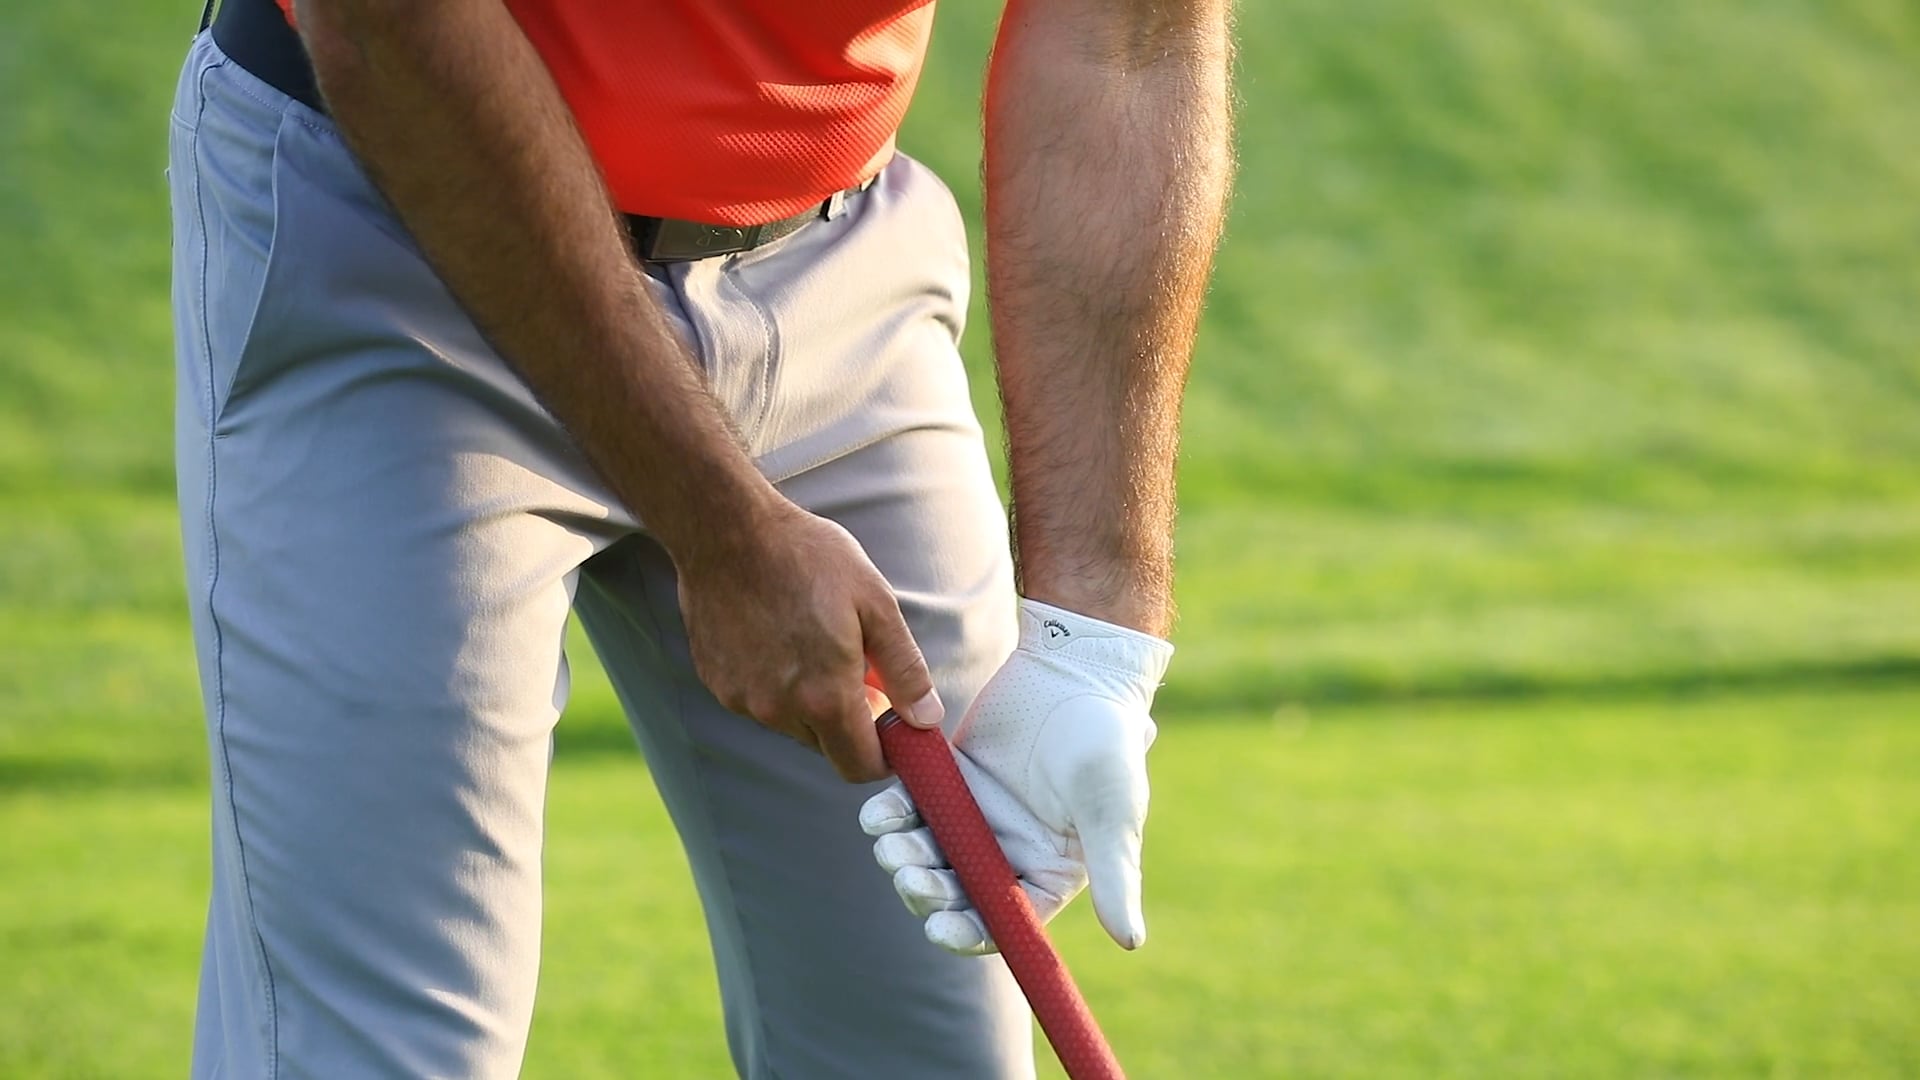 Golf grip fundamentals